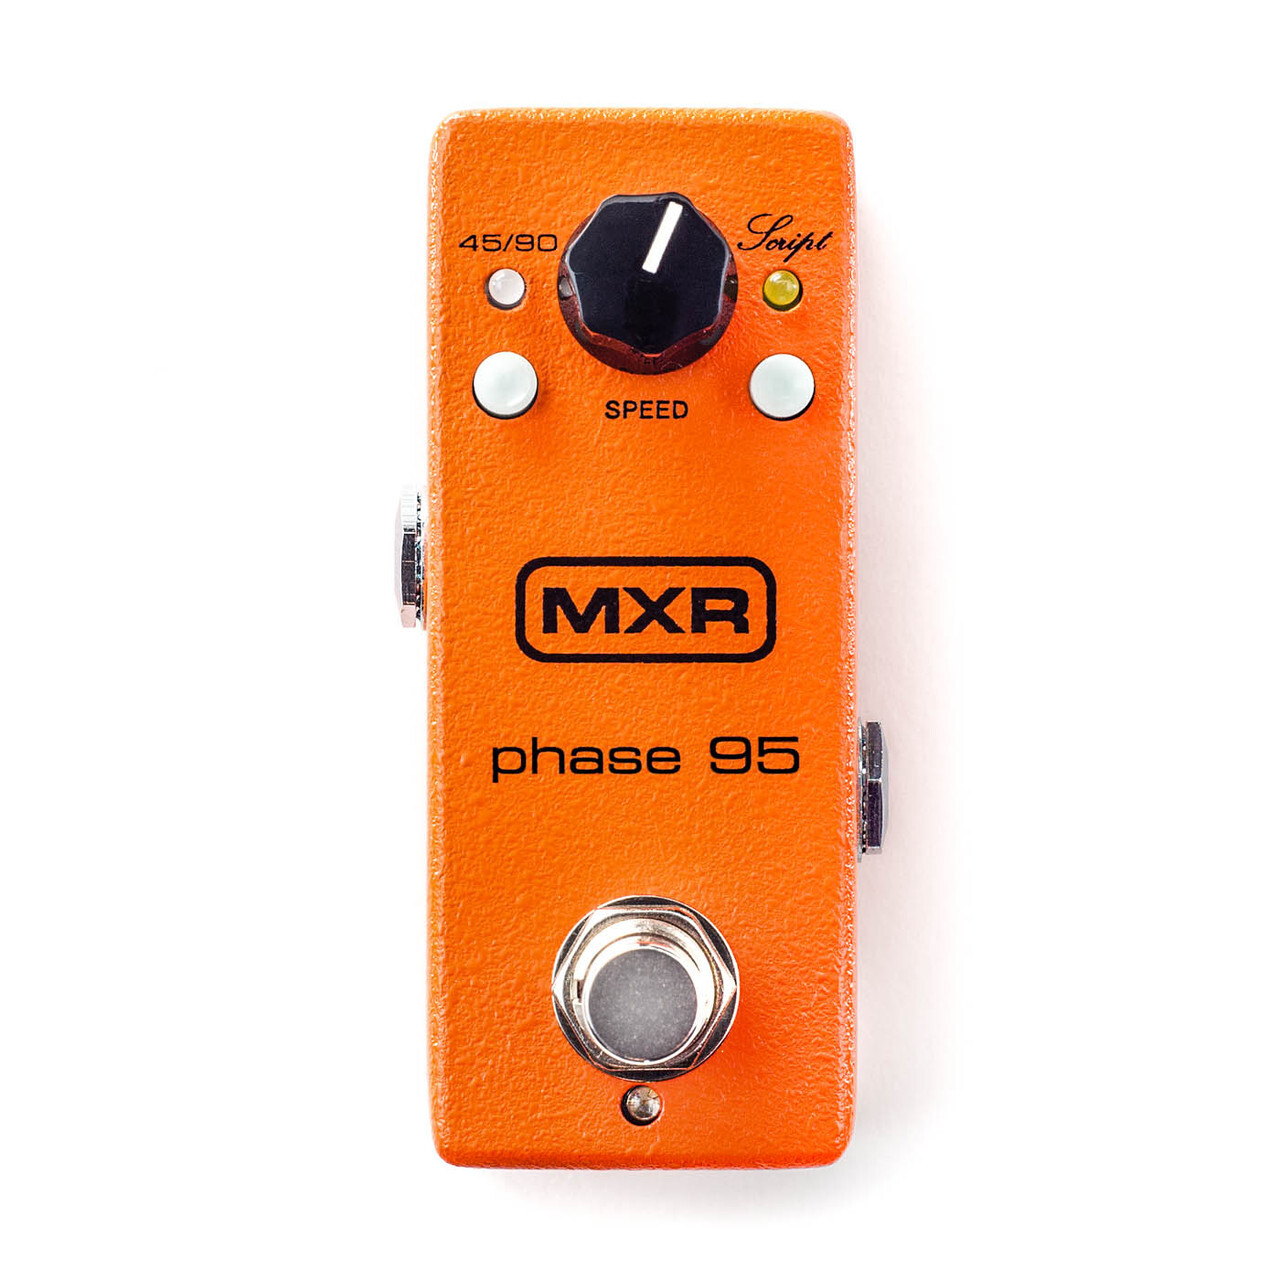 MXR Phase 95 guitar pedal